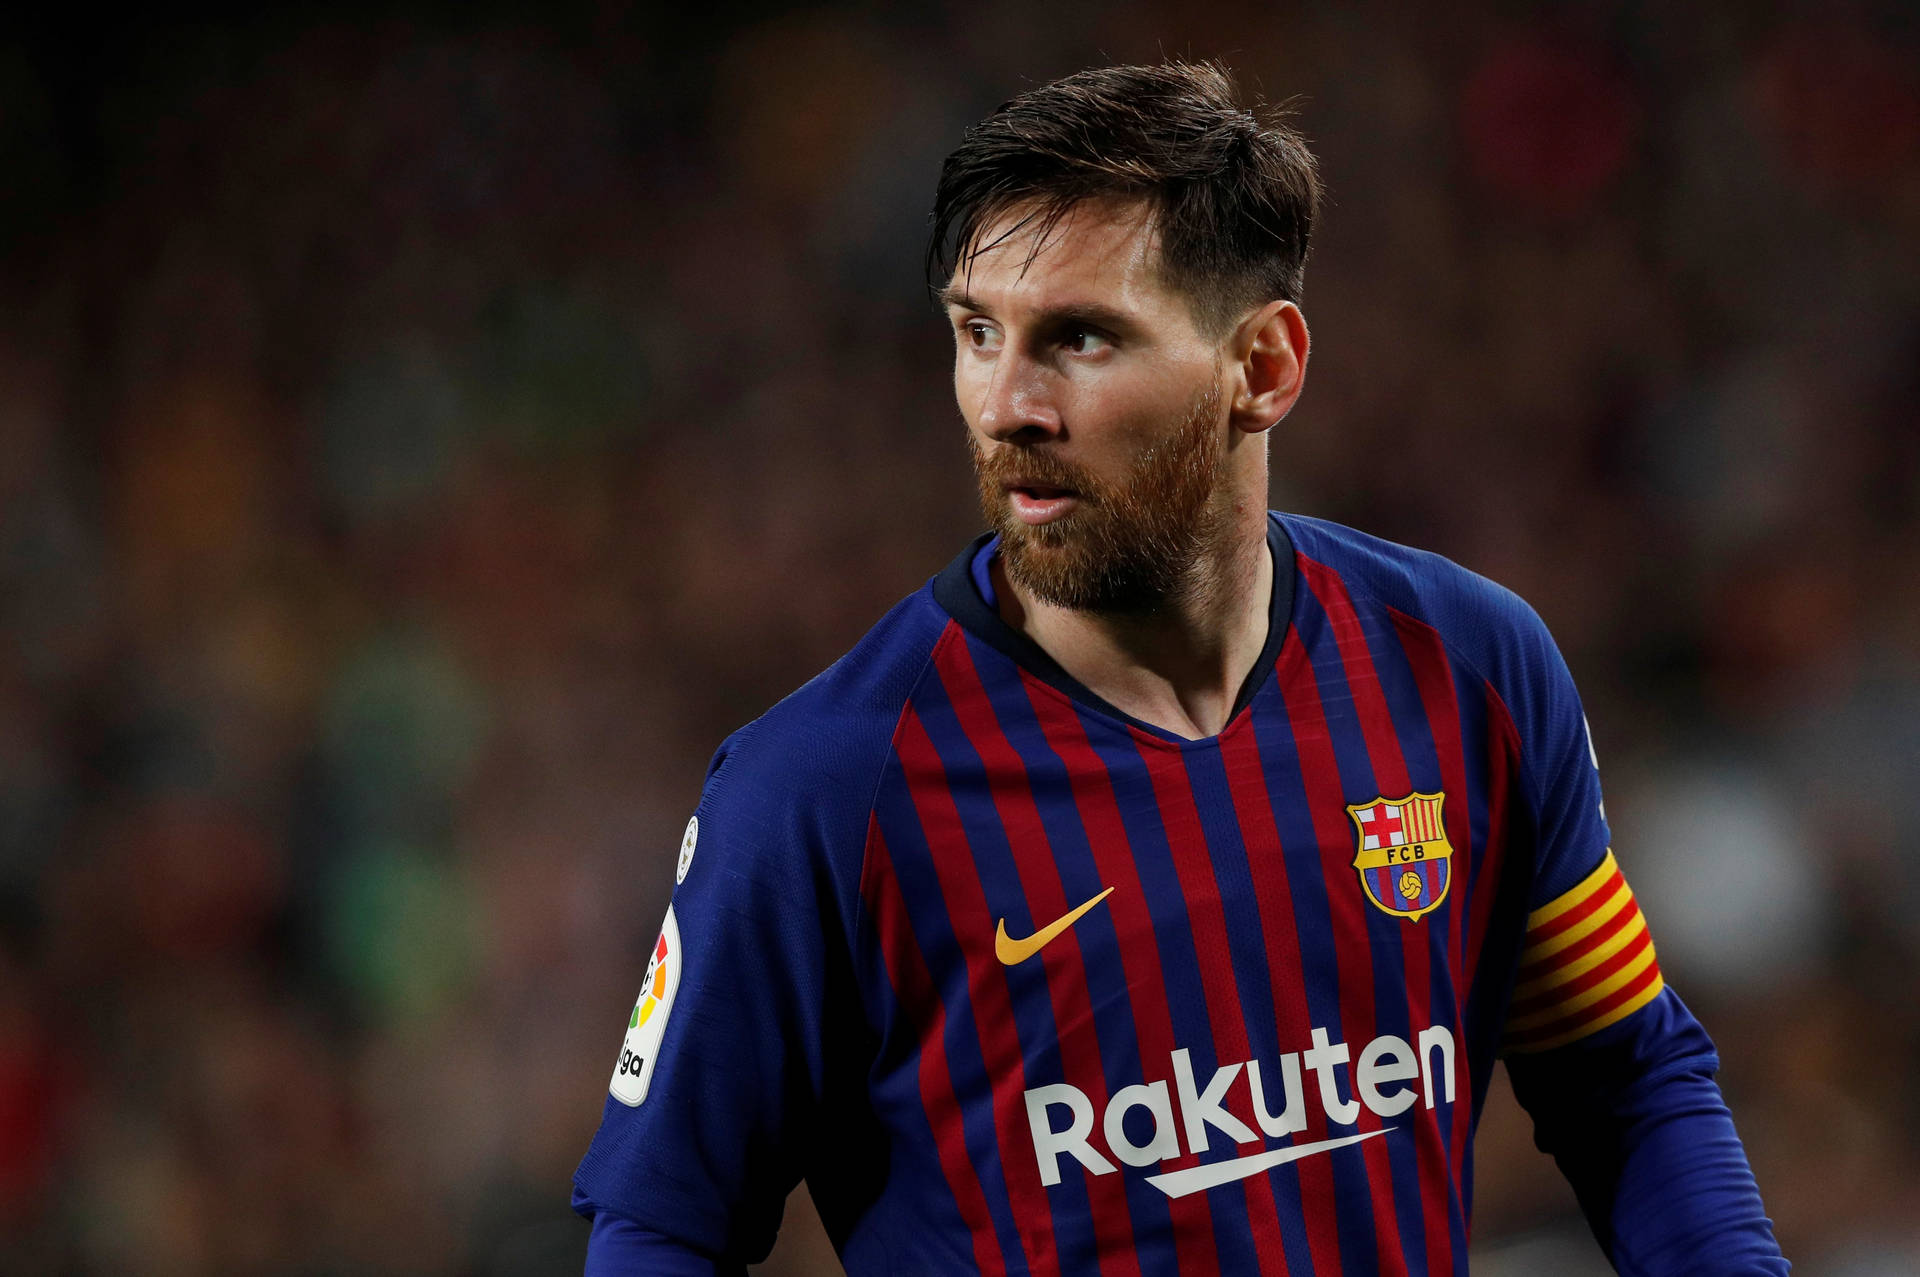 Messi2020 Barcelona Rakuten-trikot Wallpaper